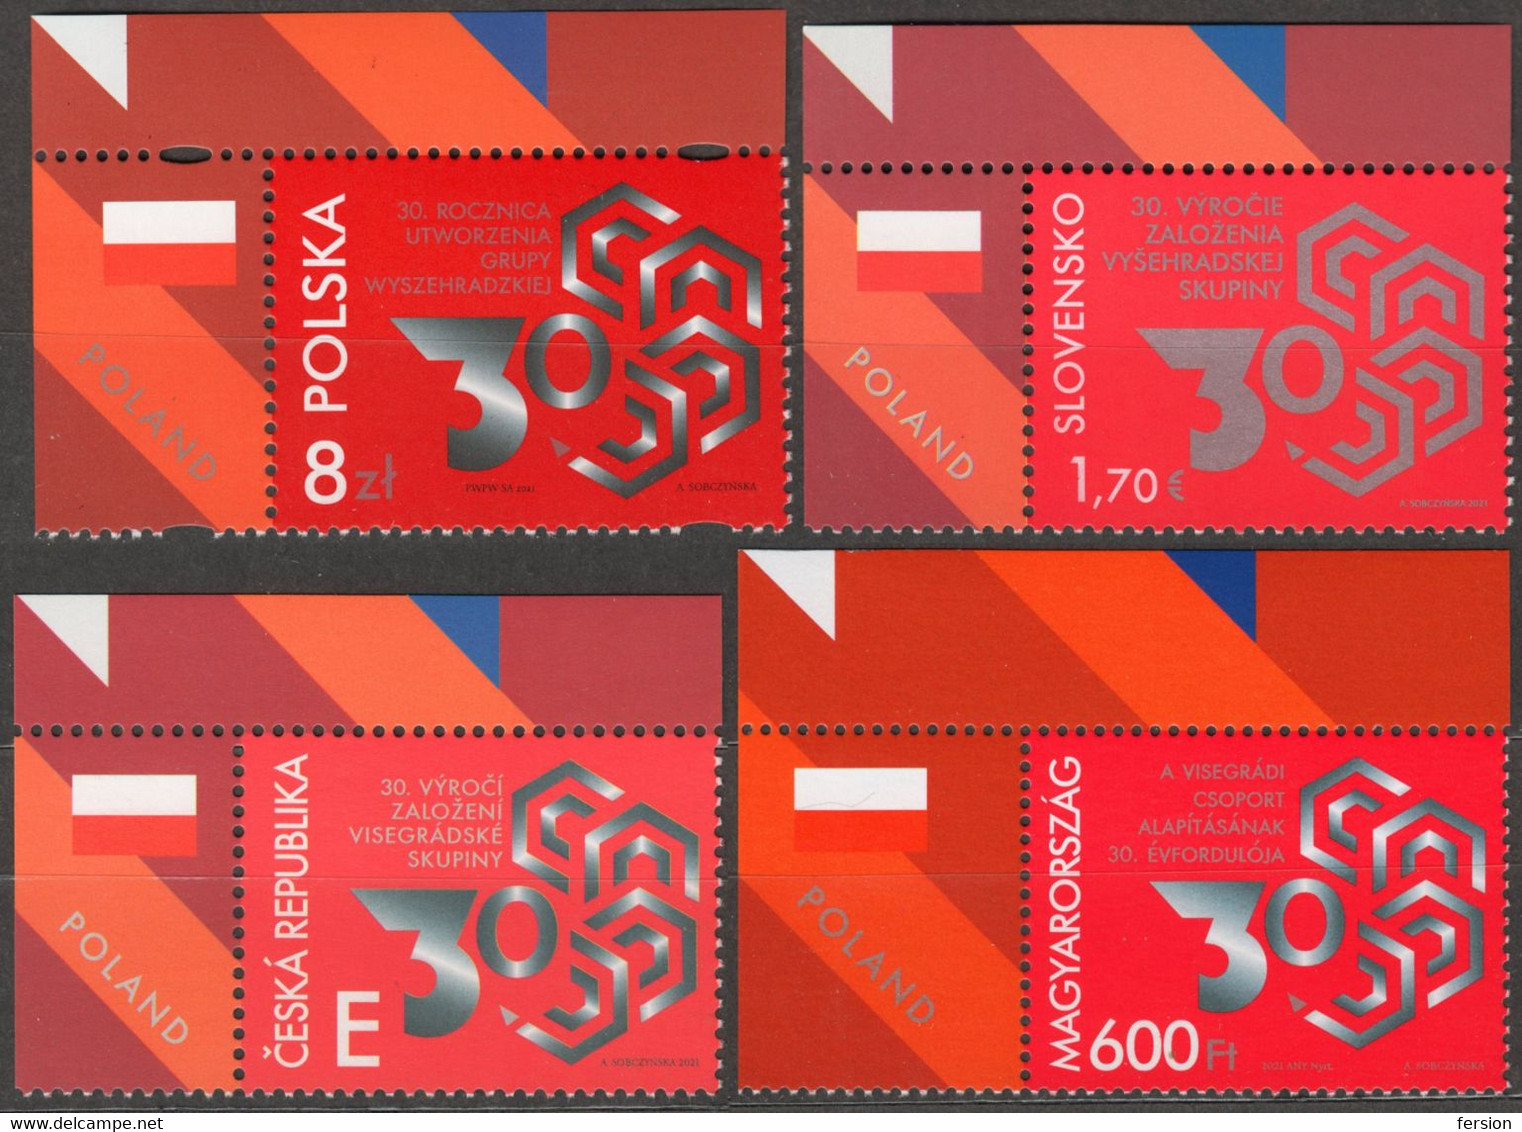 JOINT ISSUE 2021 FLAG Label Vignette Poland Slovakia Hungary Czechia Czech 30th Anniv. Formation Visegrád Group V4 - Unused Stamps